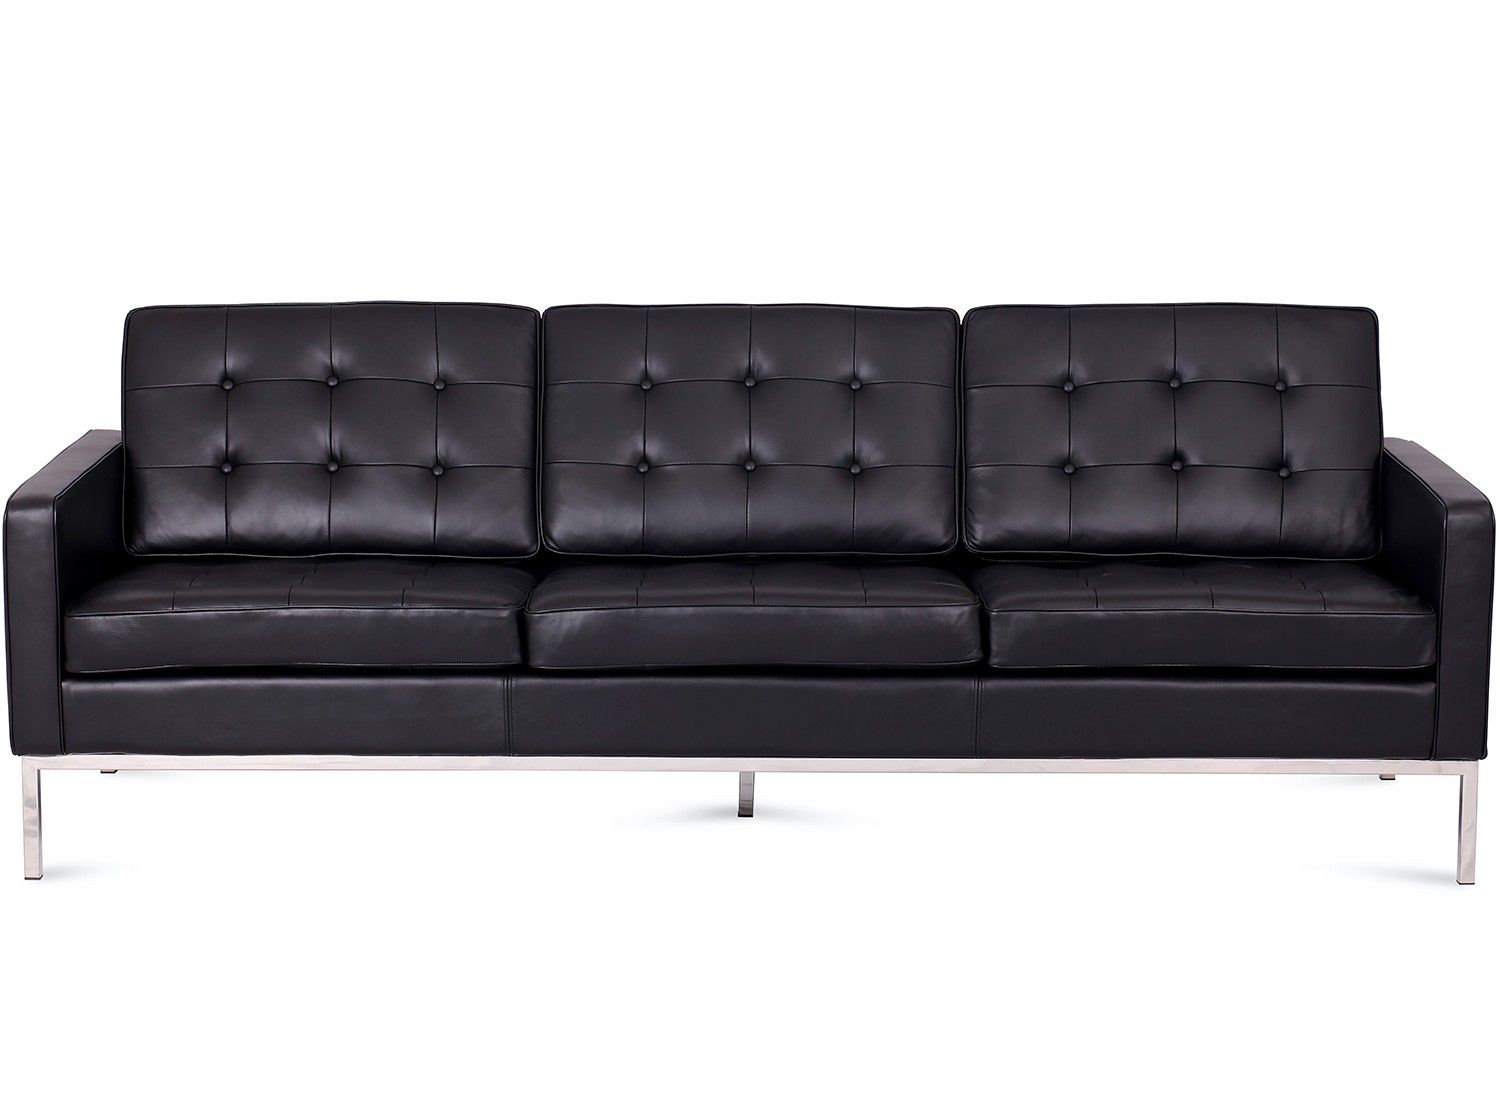 Florence Knoll Sofa 3 Seater Leather Platinum Replica Regarding Florence Knoll 3 Seater Sofas (View 8 of 15)